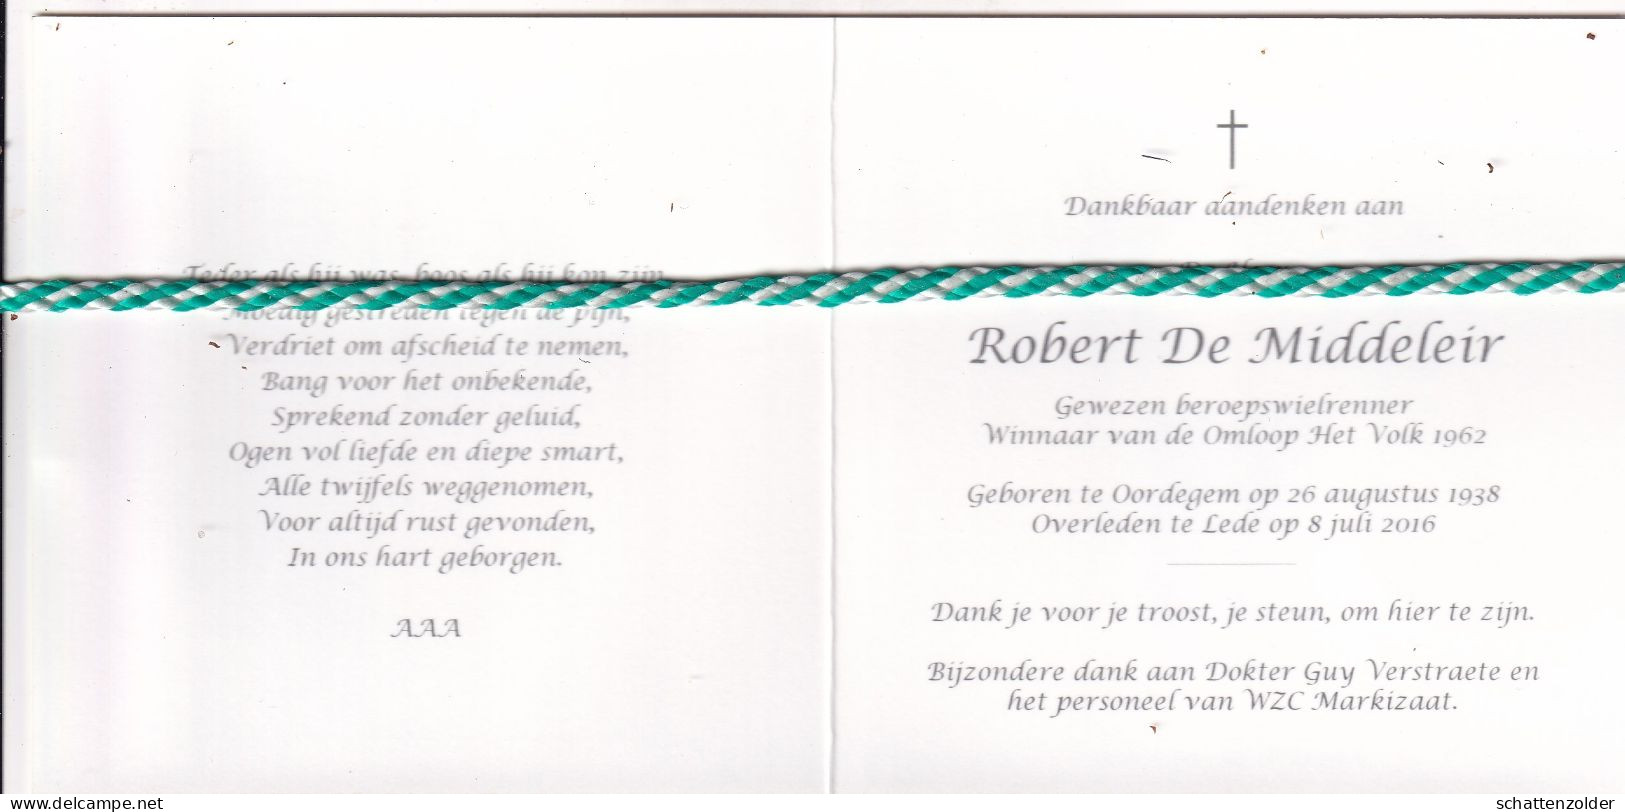 Robert De Middeleir, Oordegem 1938, Lede 2016. Gewezen Beroepsrenner, Winnaar Omloop Het Volk 1962. Foto Wielrenner - Décès